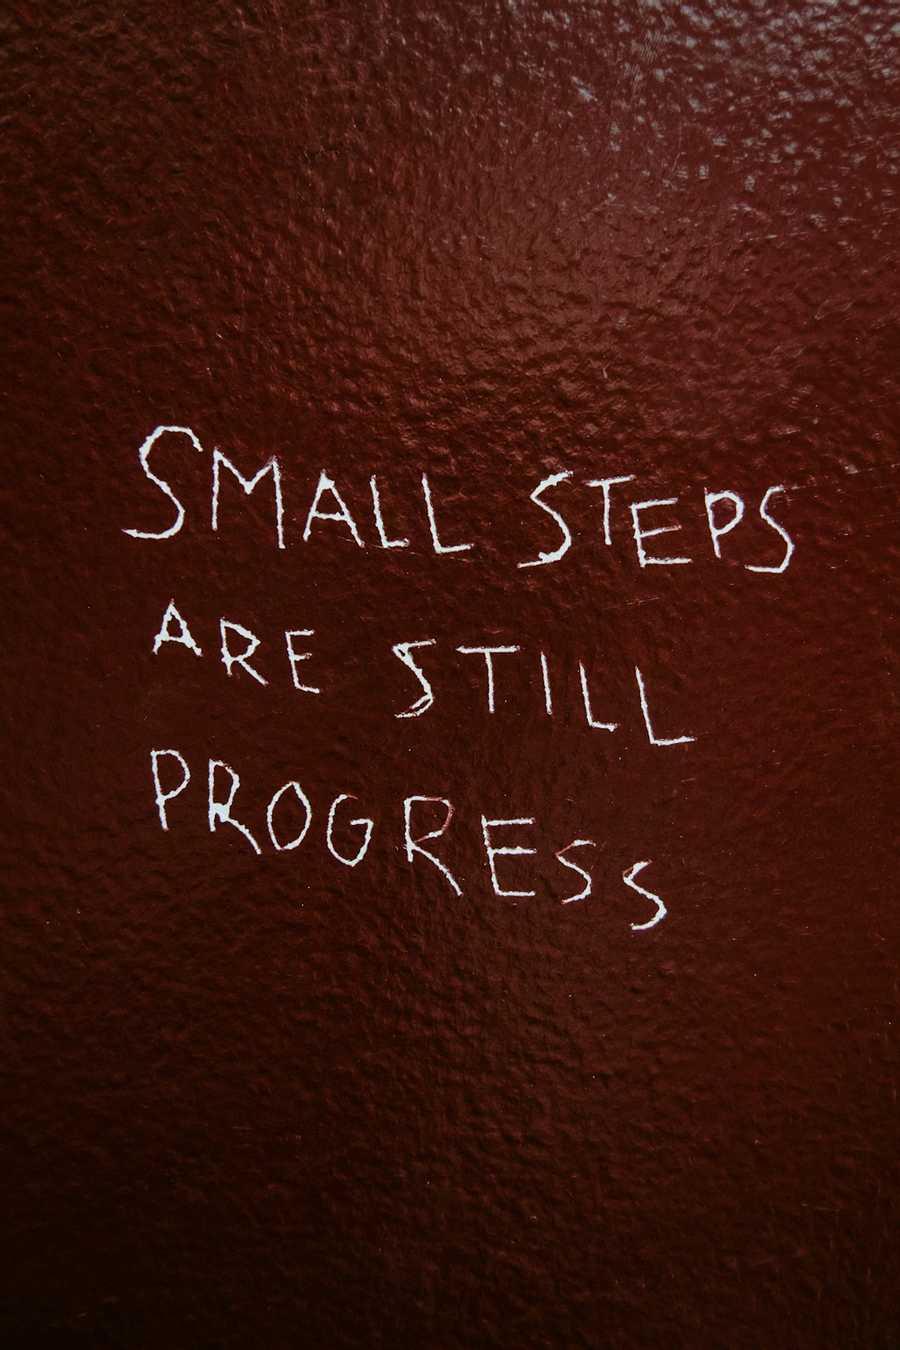 [12] Make little progress each day